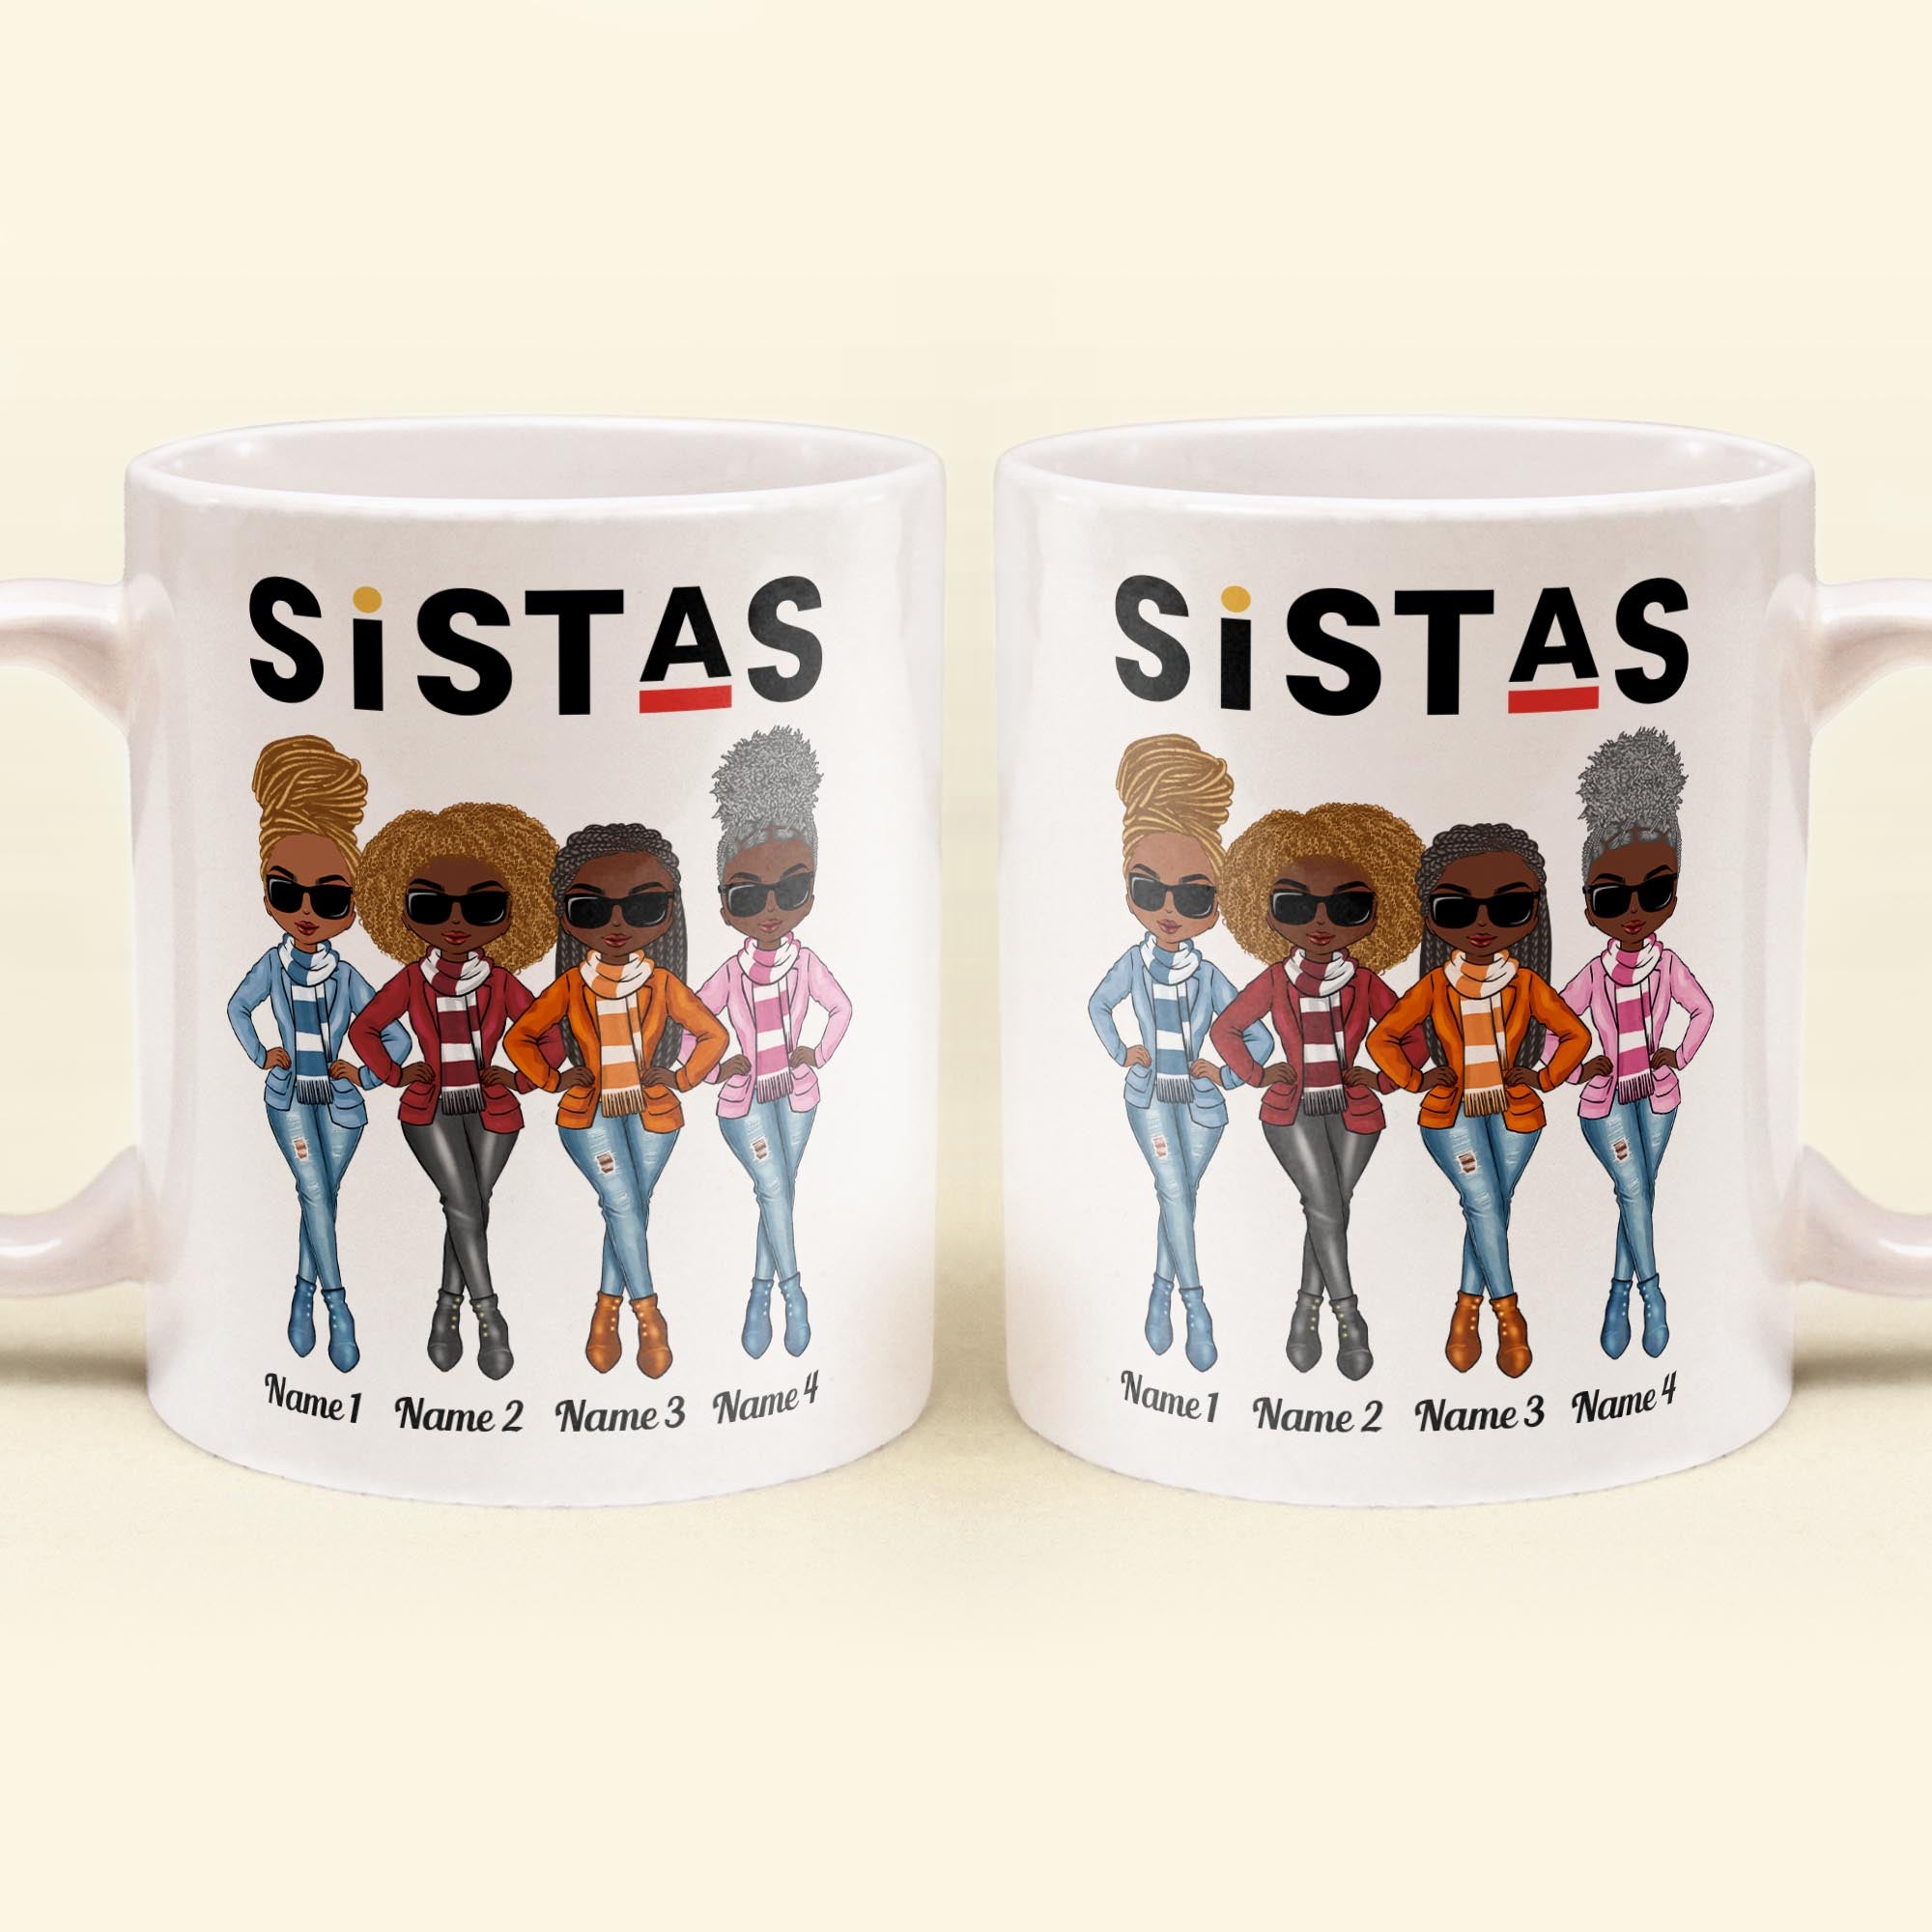 Sistas - Personalized Mug - Birthday & Christmas Gift For Sista, Sister, Soul Sister, Best Friend, BFF, Bestie, Friend